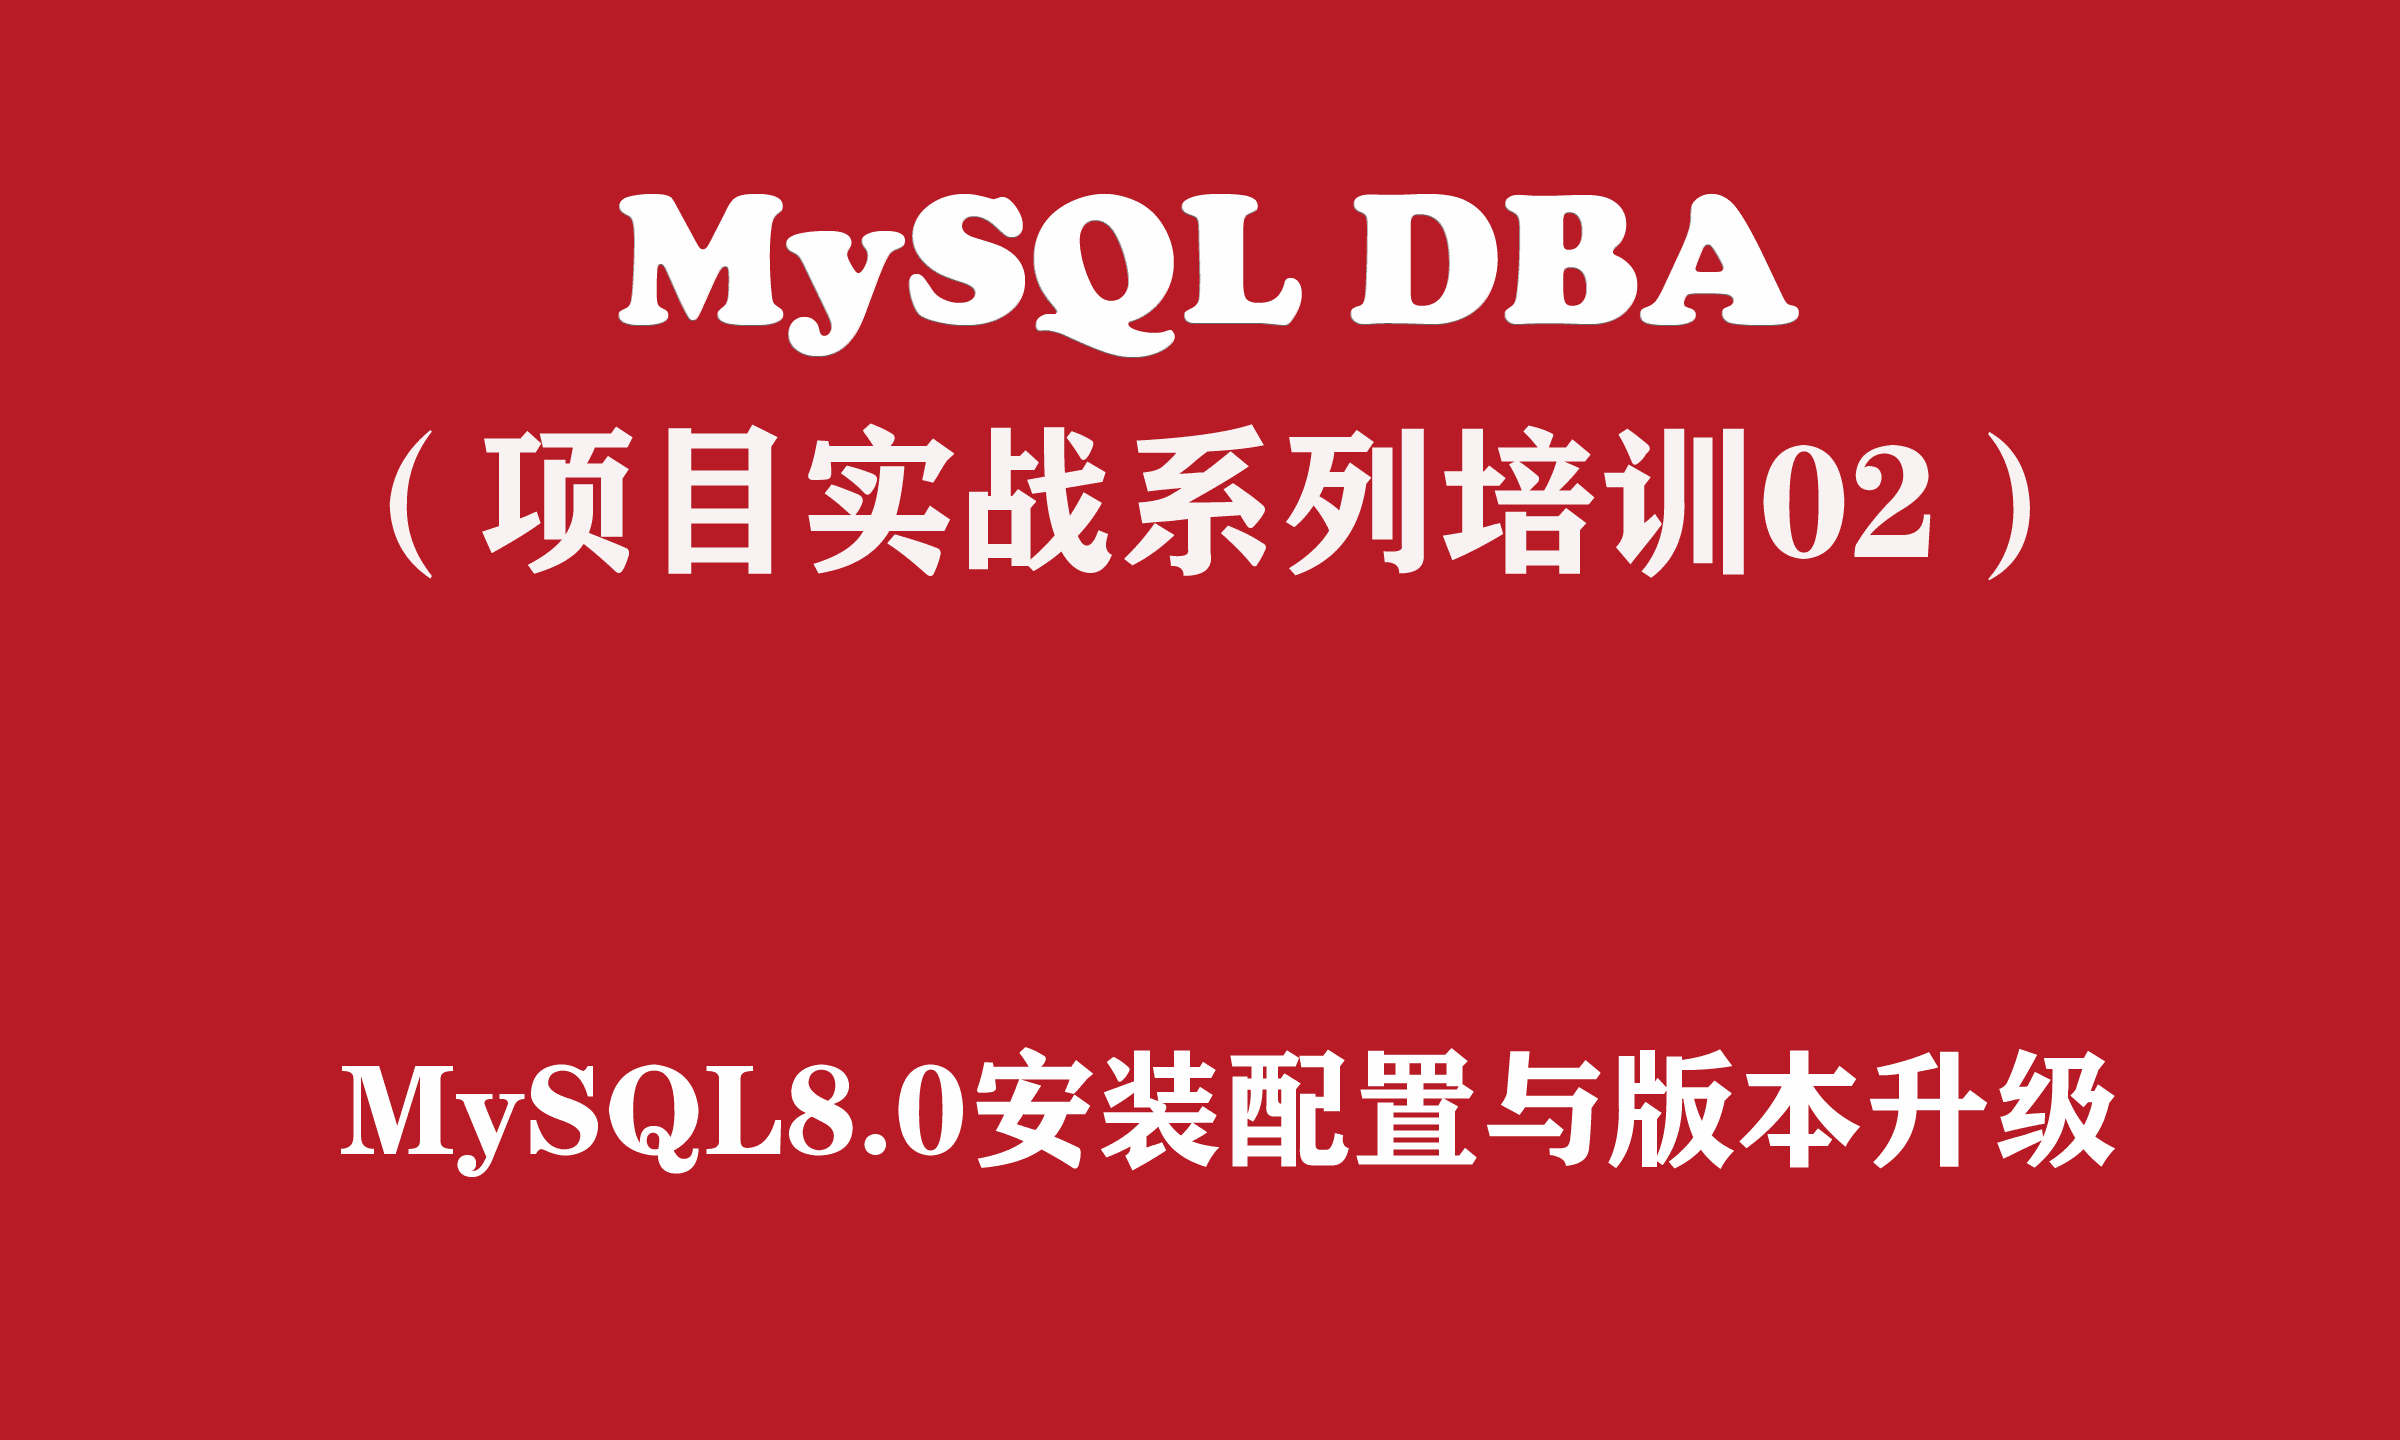 MySQL8.0安装配置与版本升级【MySQL DBA实战培训系列02】